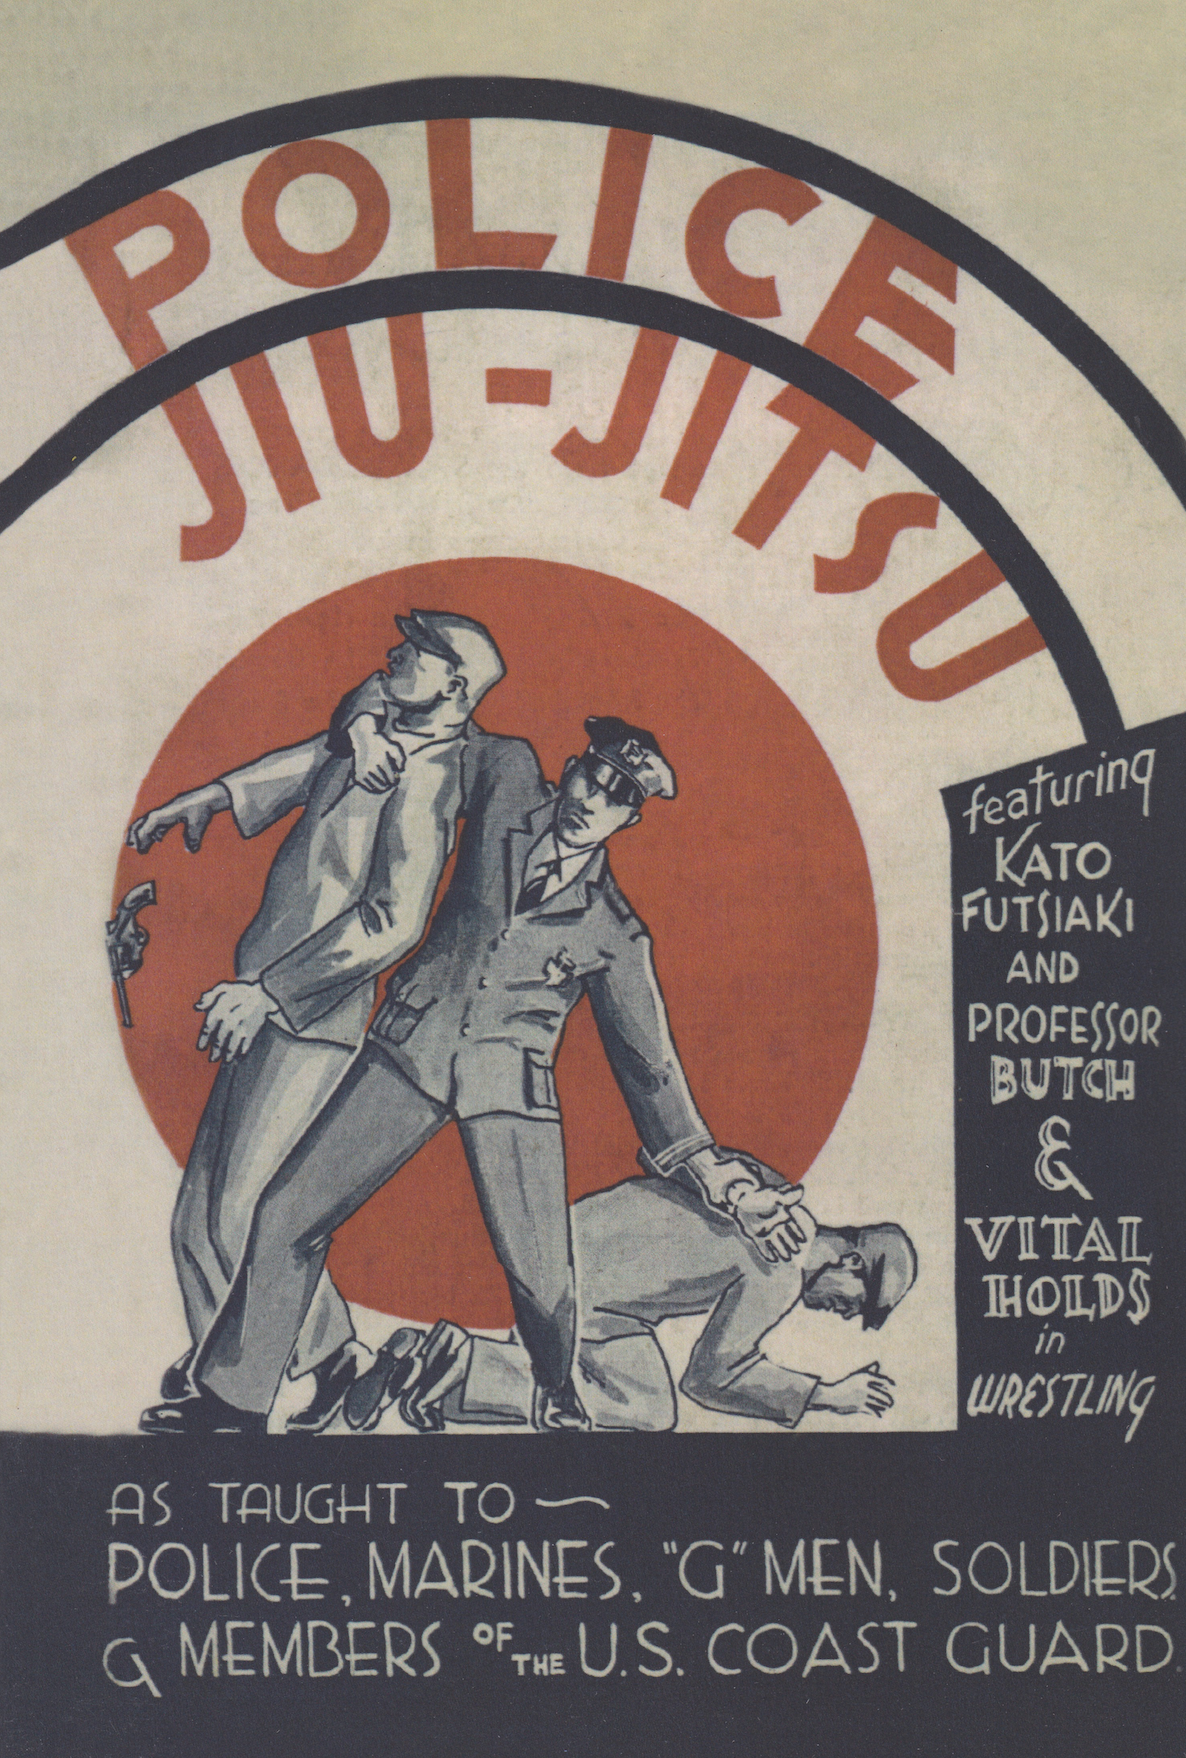 Police Jiu-Jitsu: As Taught to Police, Marines & Soldiers Book (Reprint)